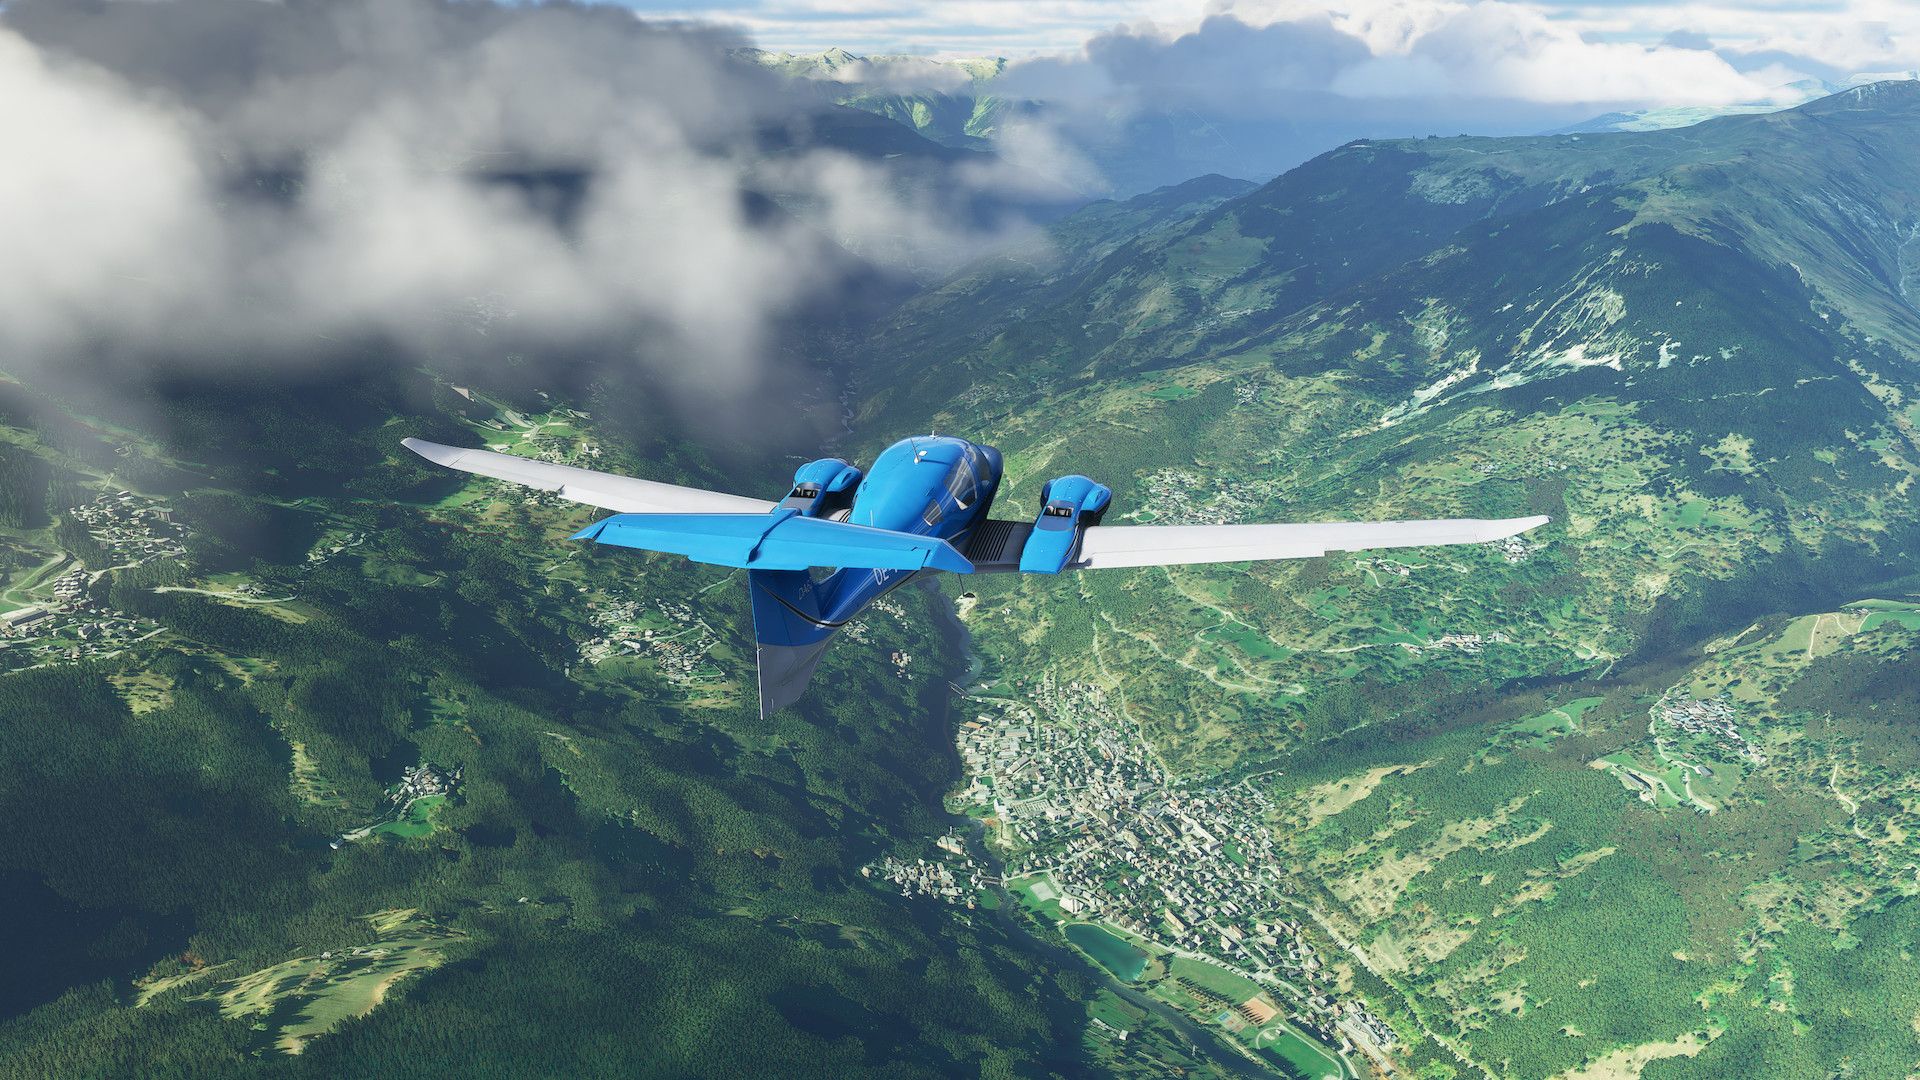 android microsoft flight simulator backgrounds